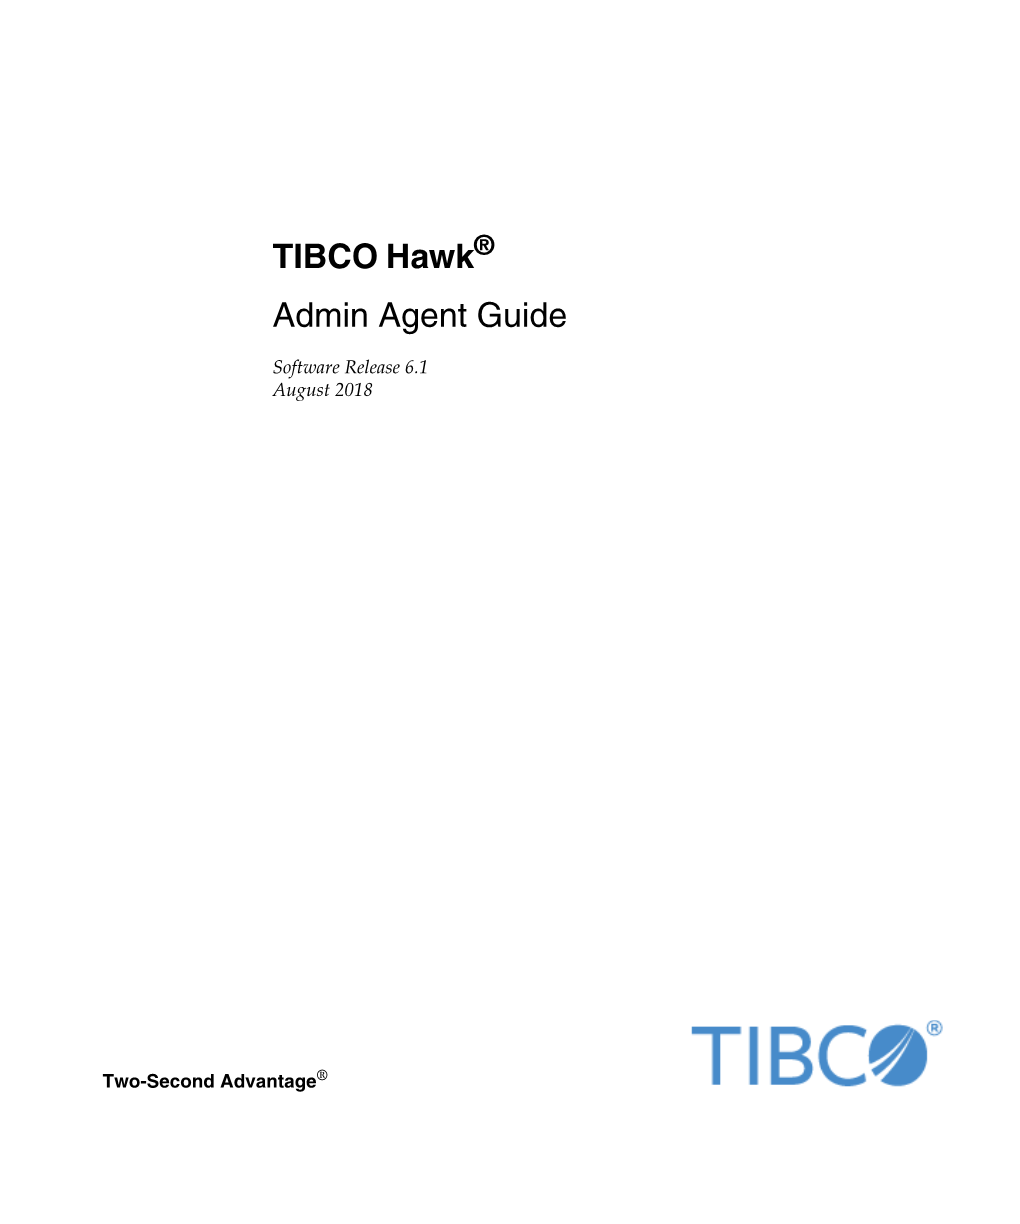 TIBCO Hawk Admin Agent Guide